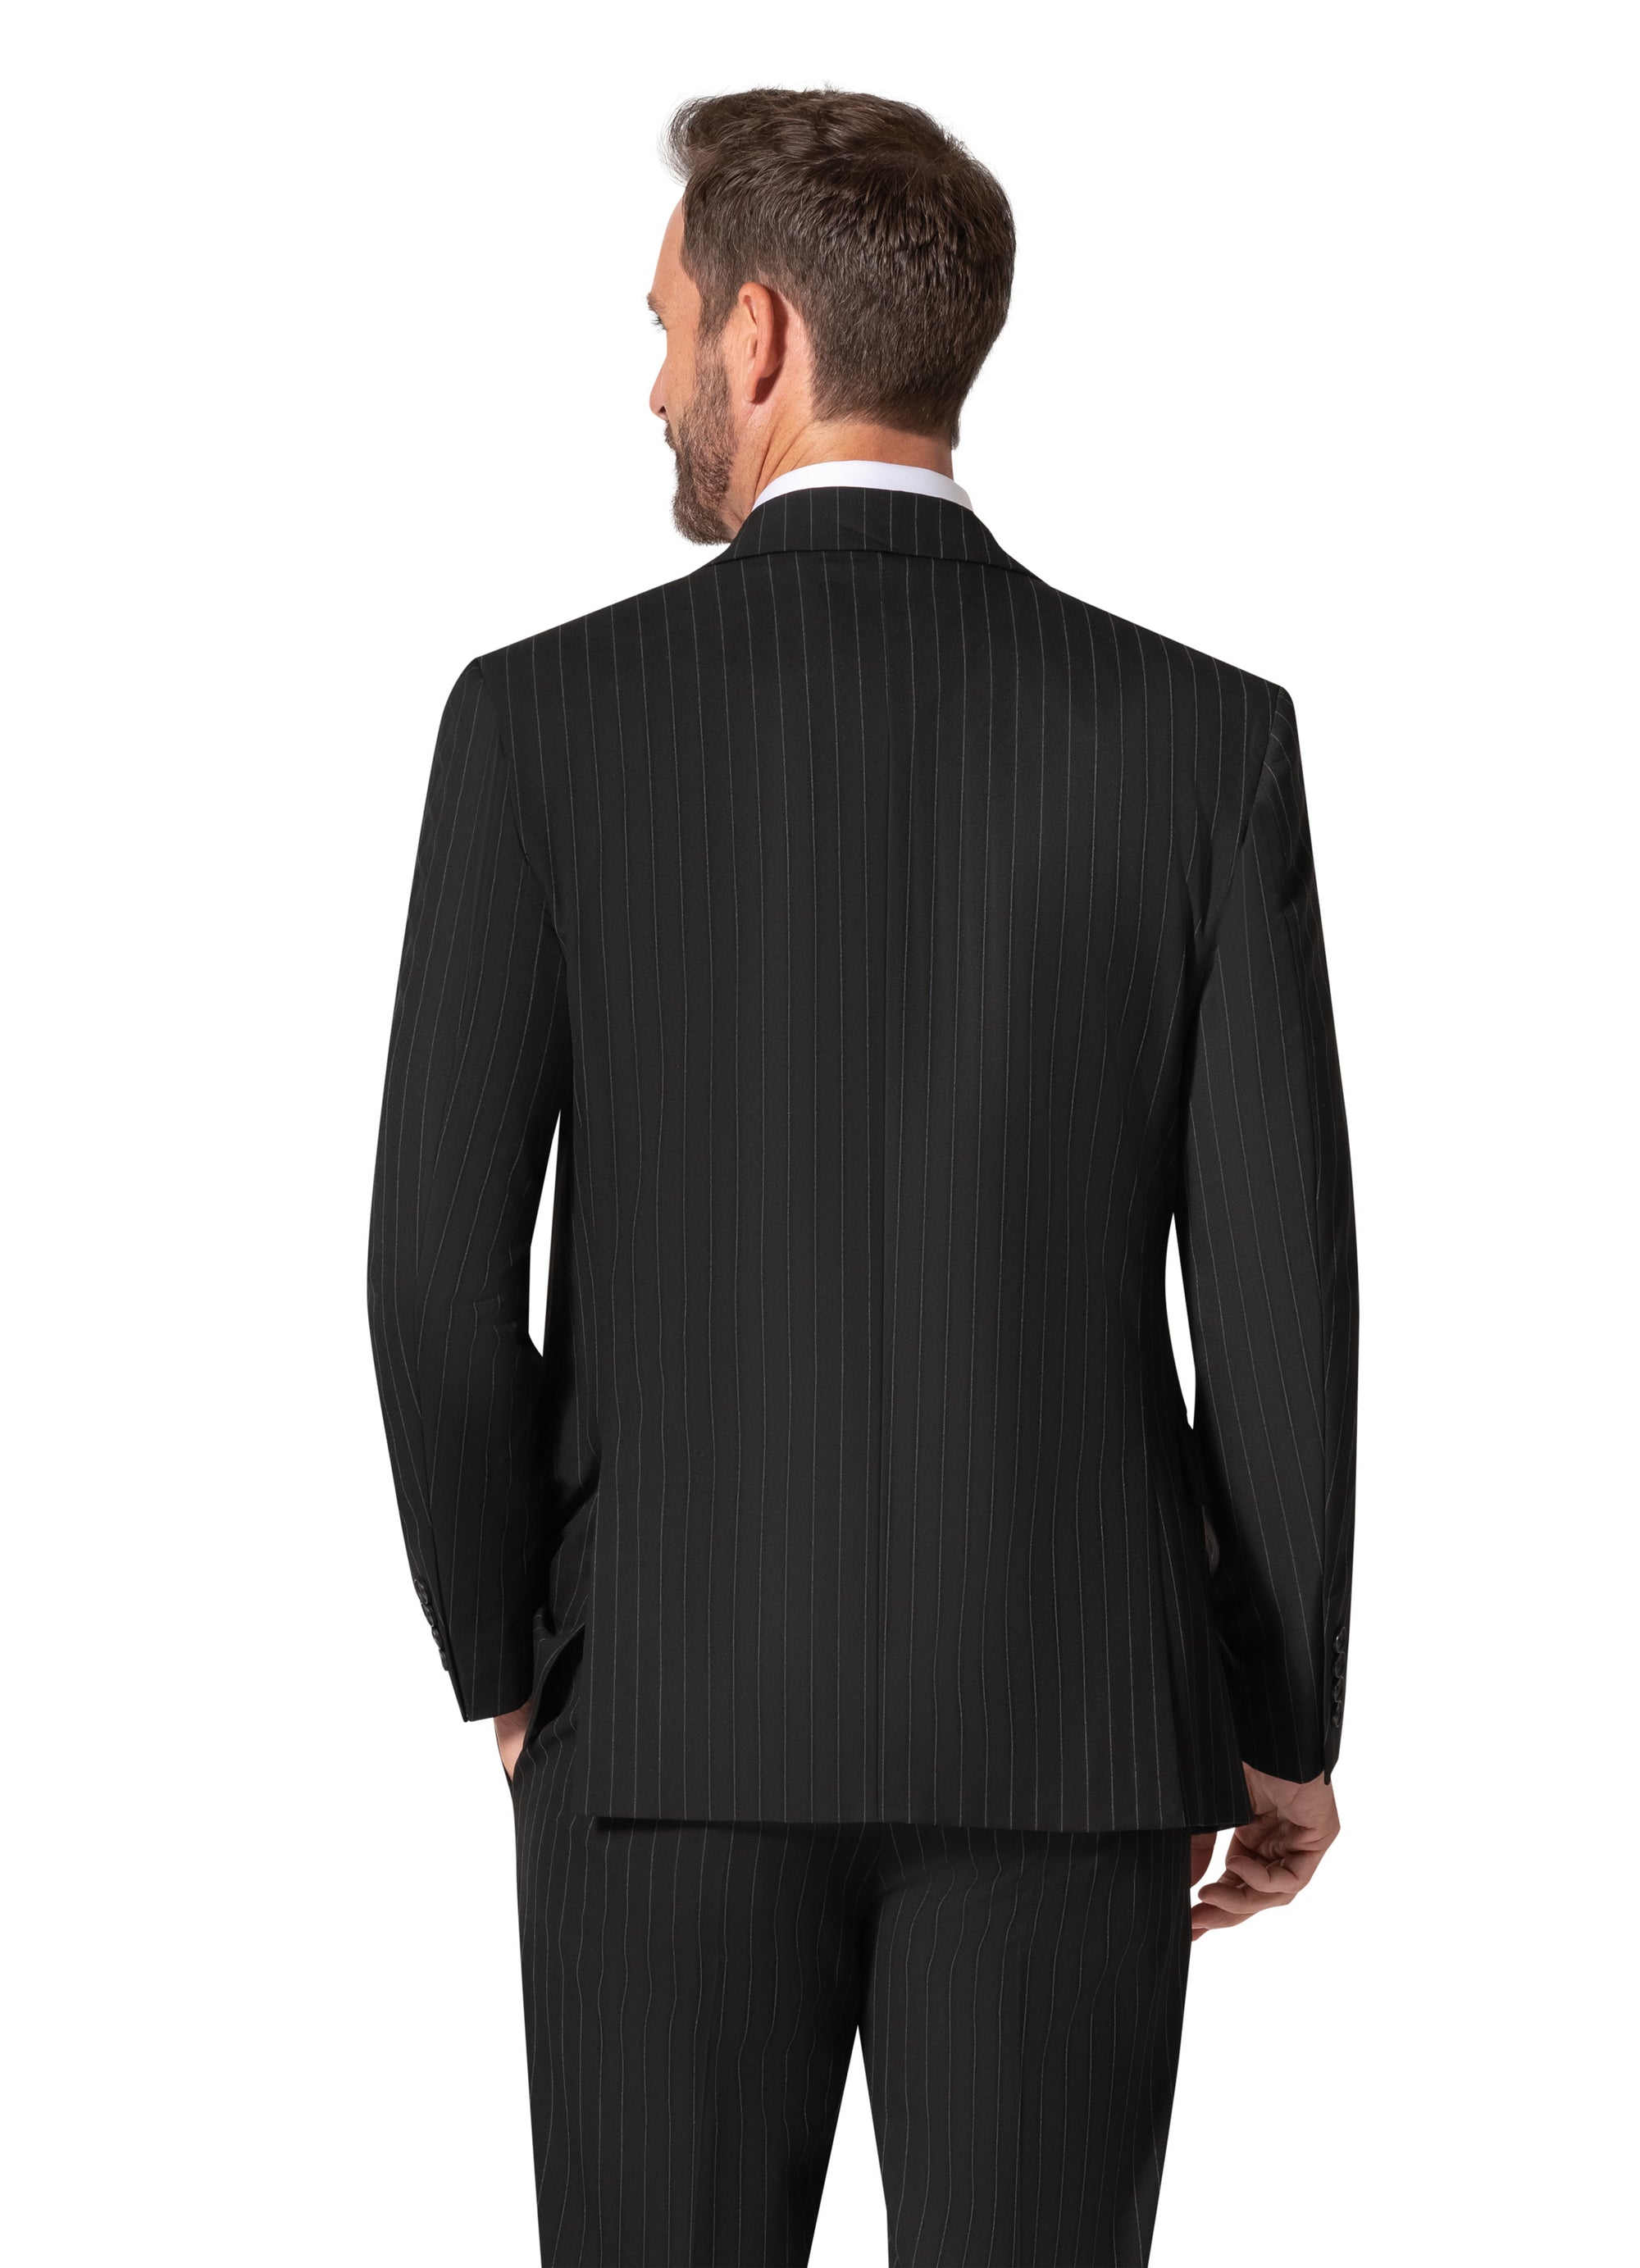 Berragamo BP04K-E32 3PC Slim Suit - Black